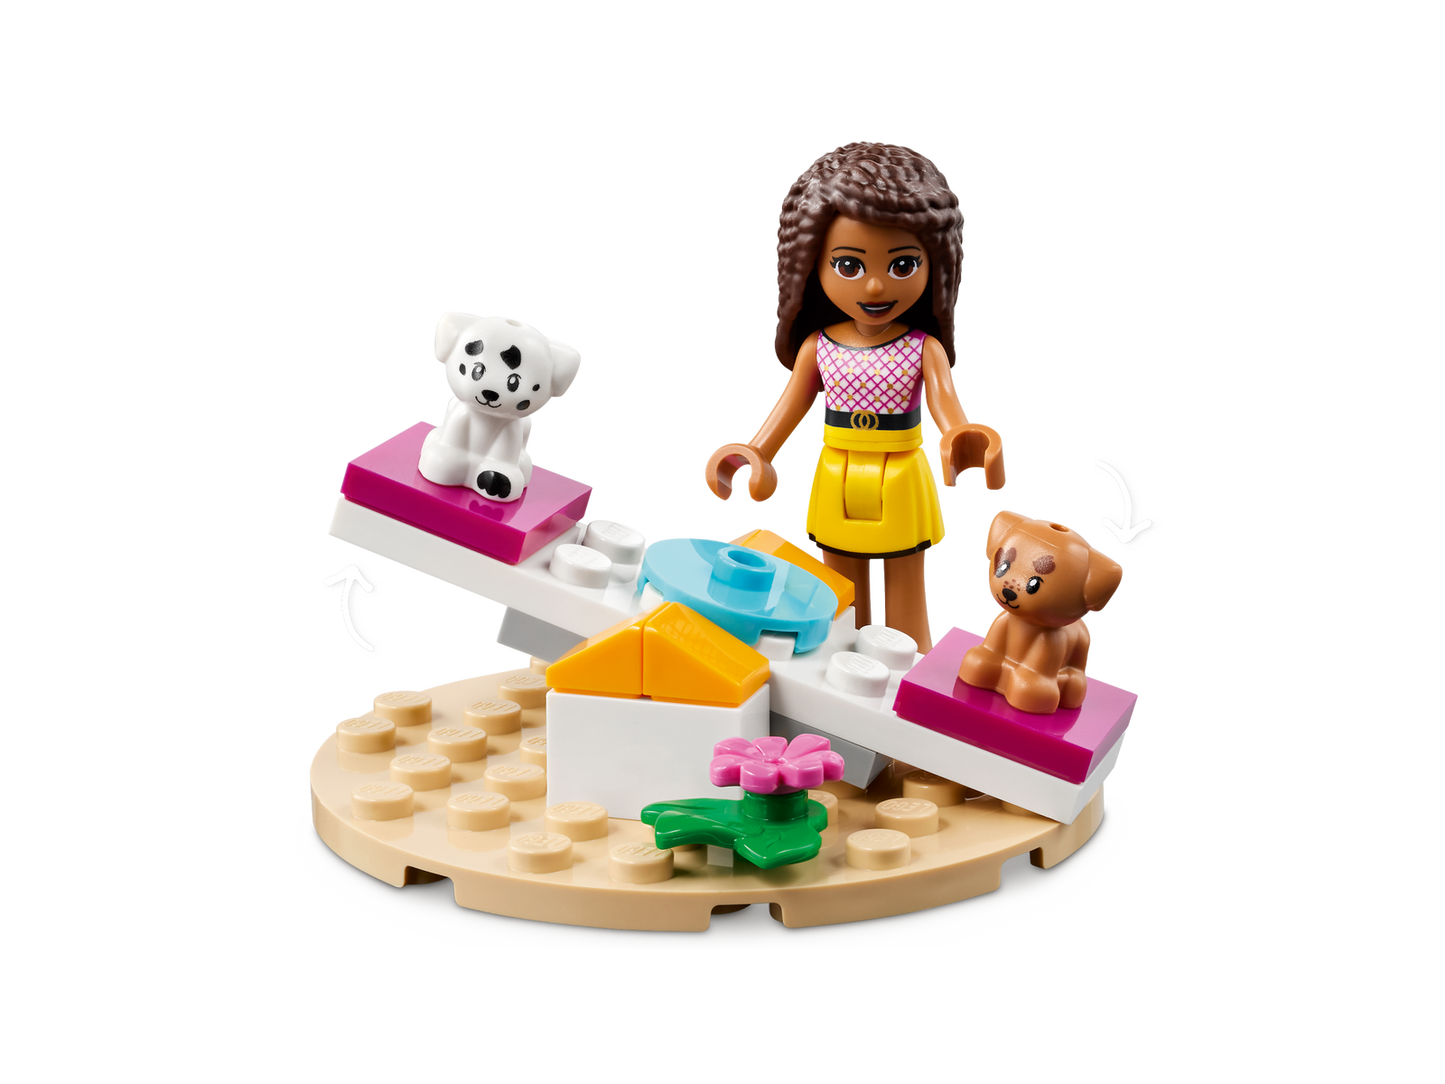 LEGO Friends Pet Playground 41698